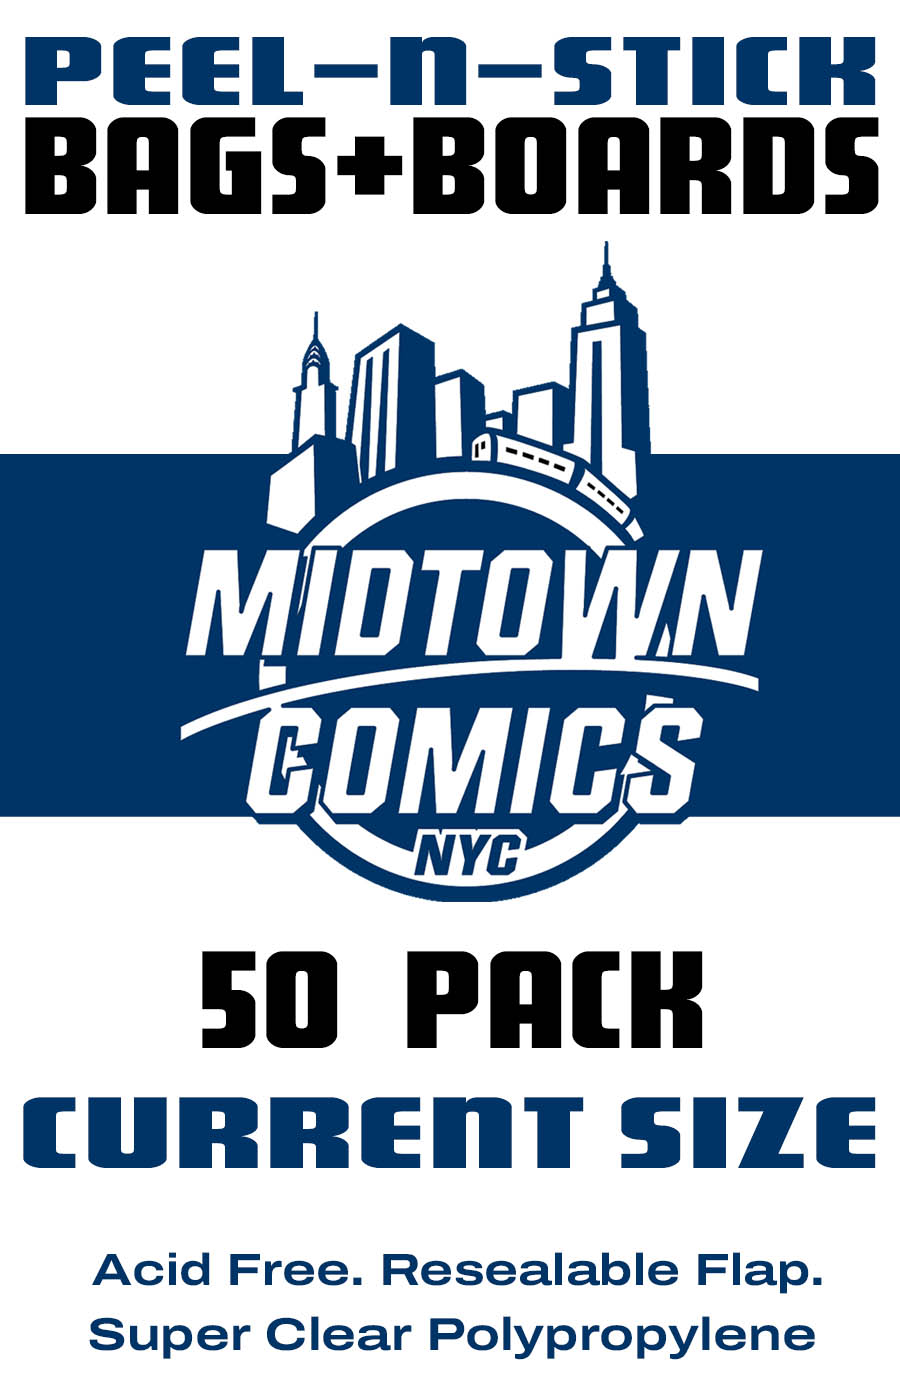 Current Size Comic Book Peel-N-Stick Bag-N-Board 50-Pack - Midtown